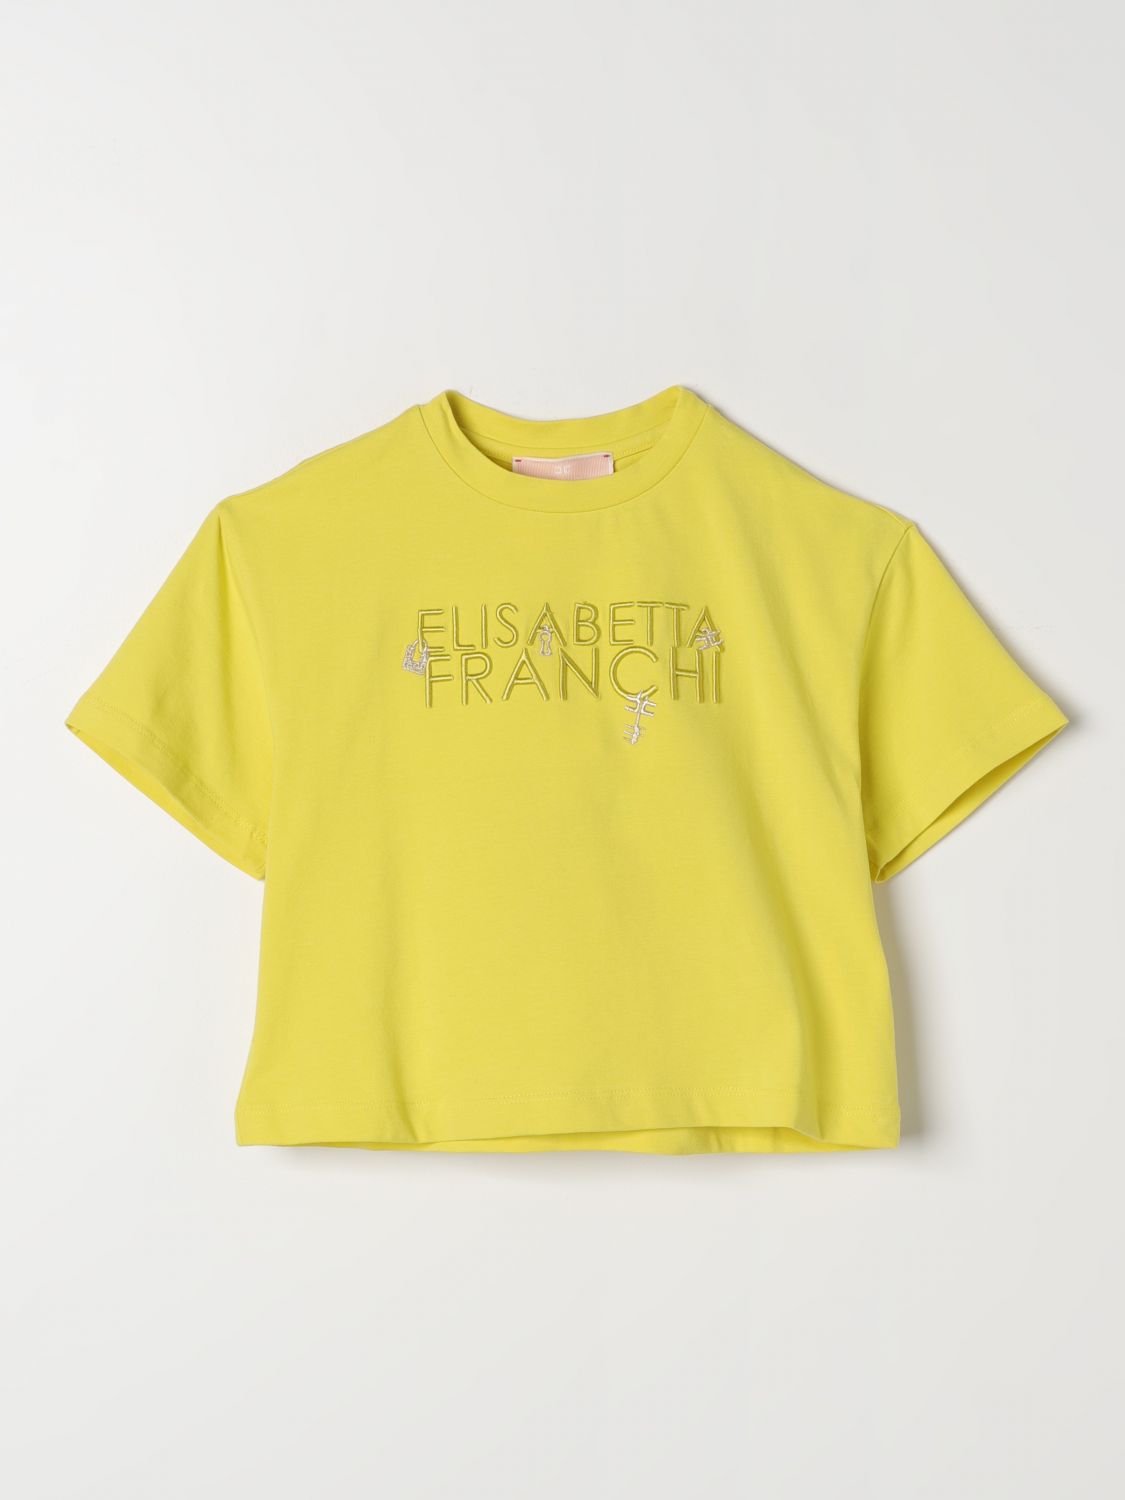 Elisabetta Franchi La Mia Bambina T-shirt  Kids Colour Cedar